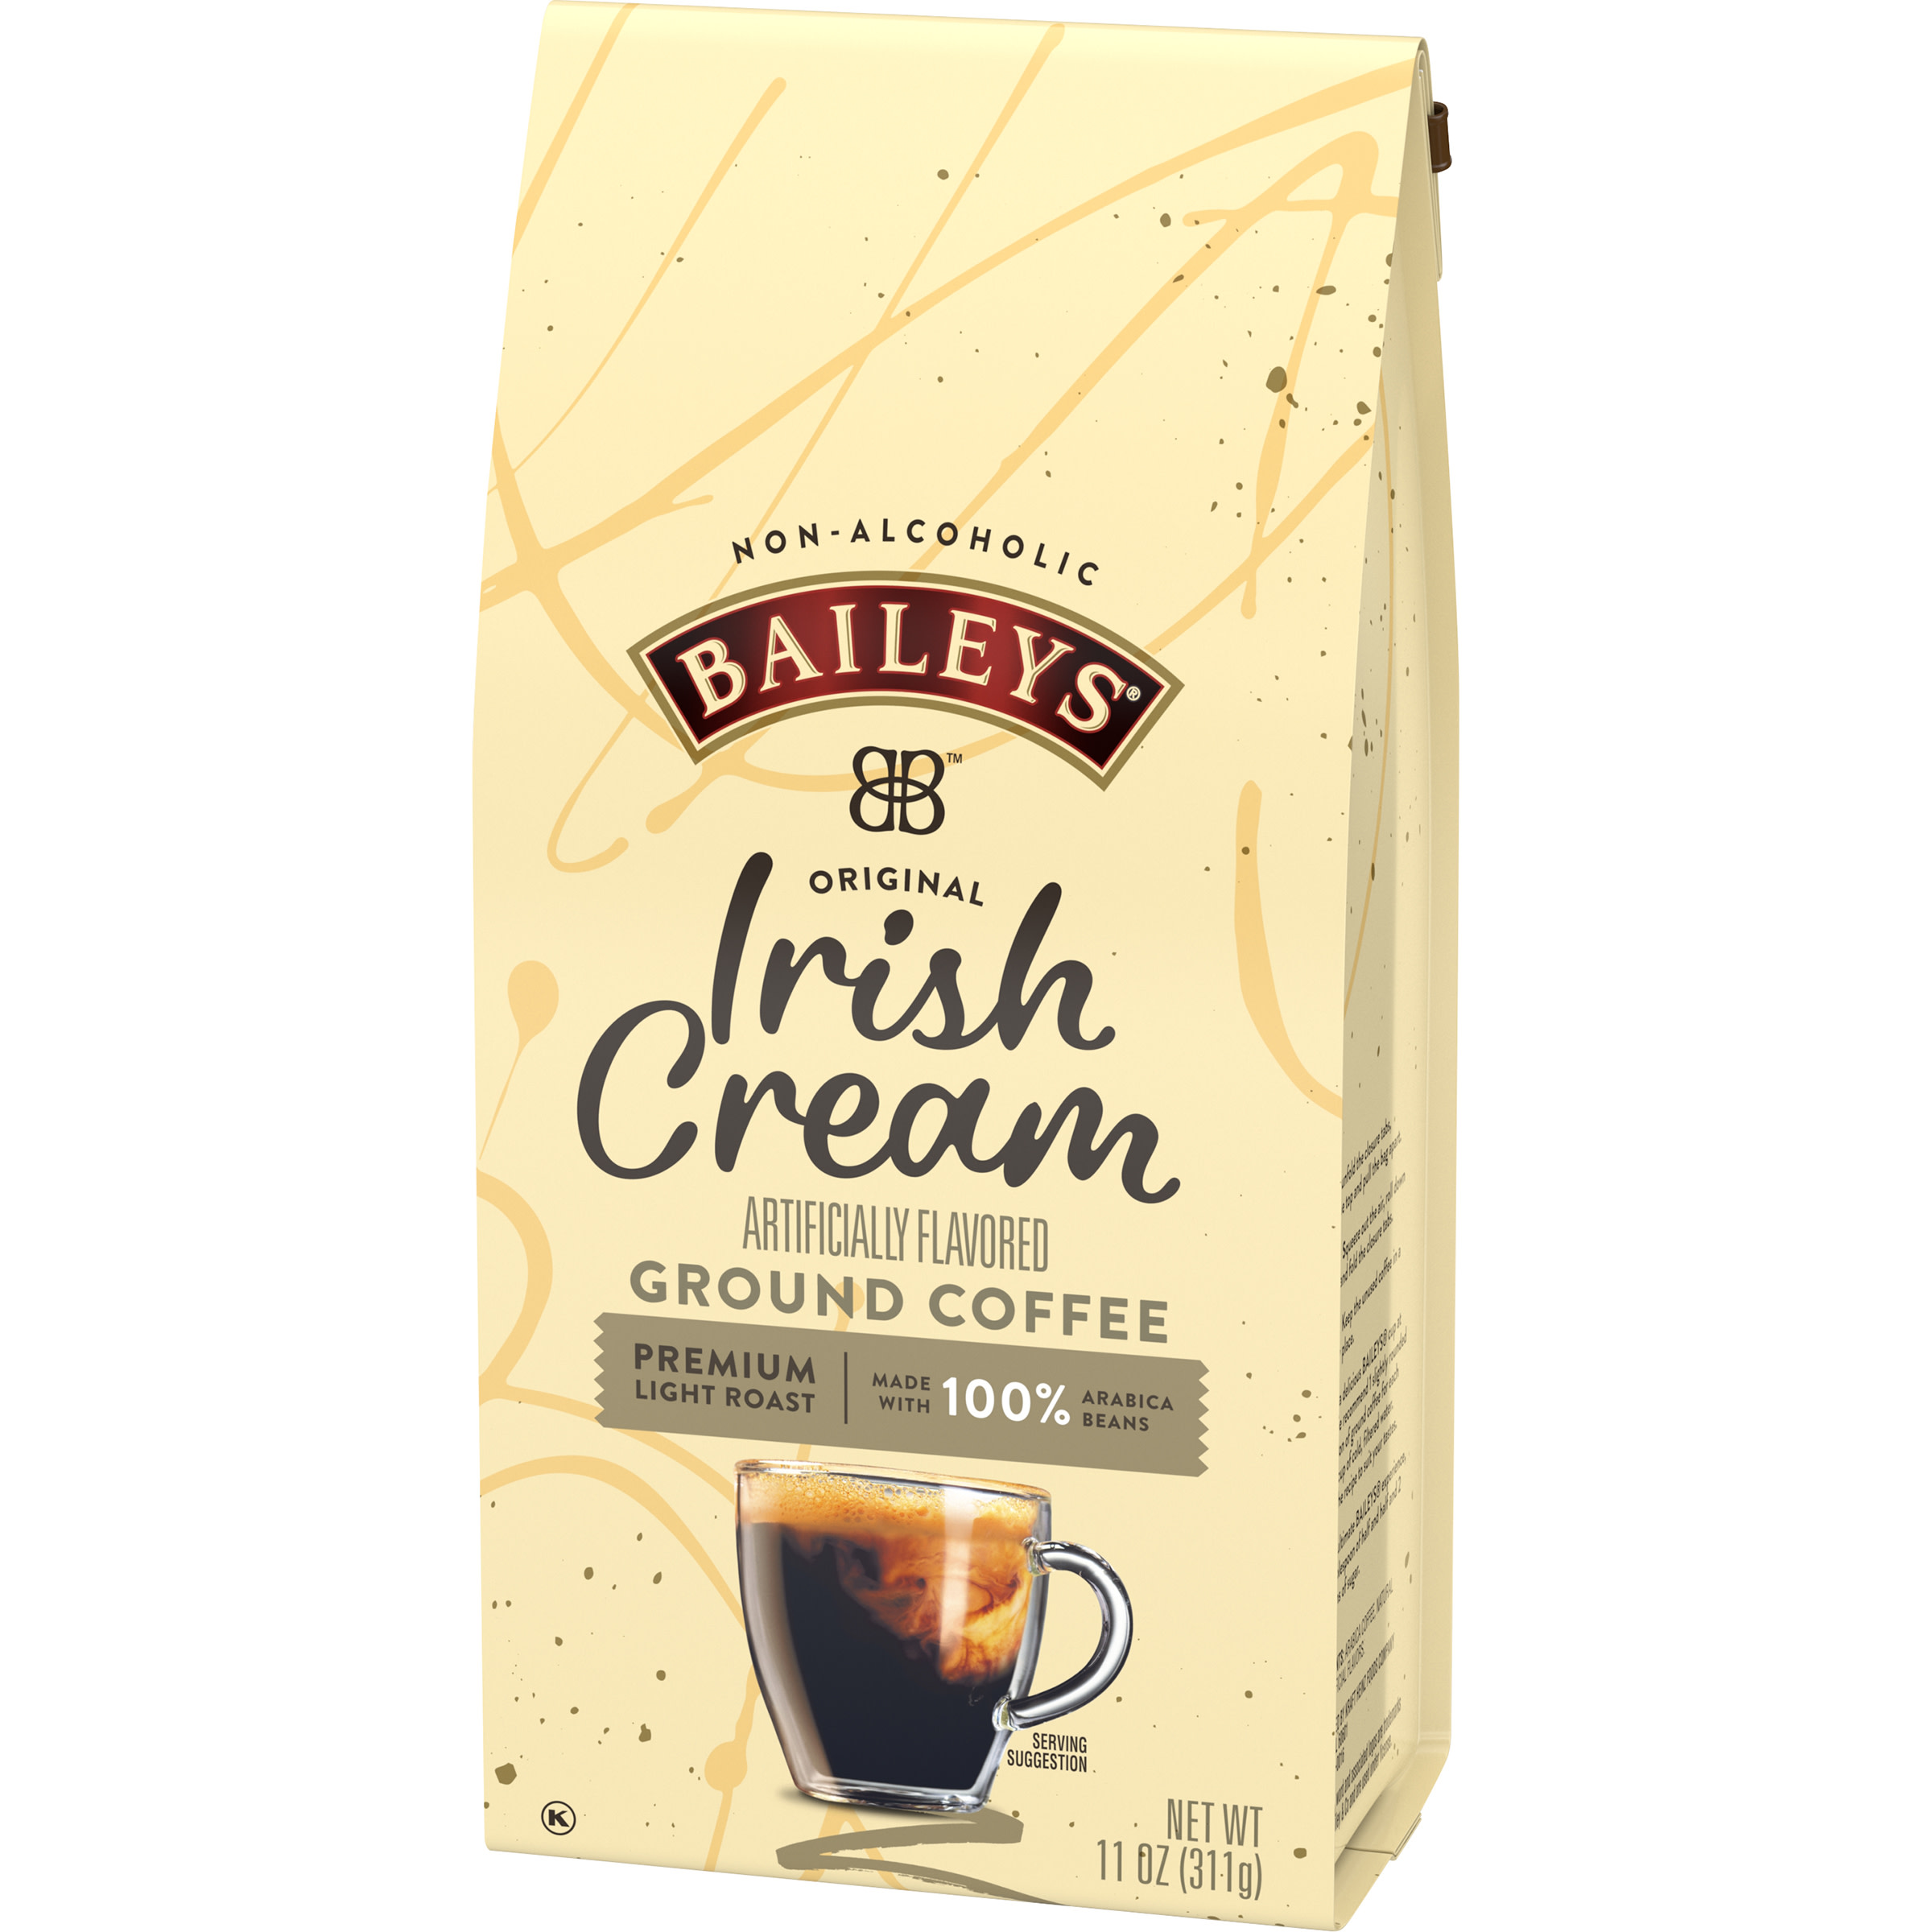 Baileys Non-Alcoholic Original Irish Cream Light Roast Ground Coffee, 11 oz Bag - image 4 of 7